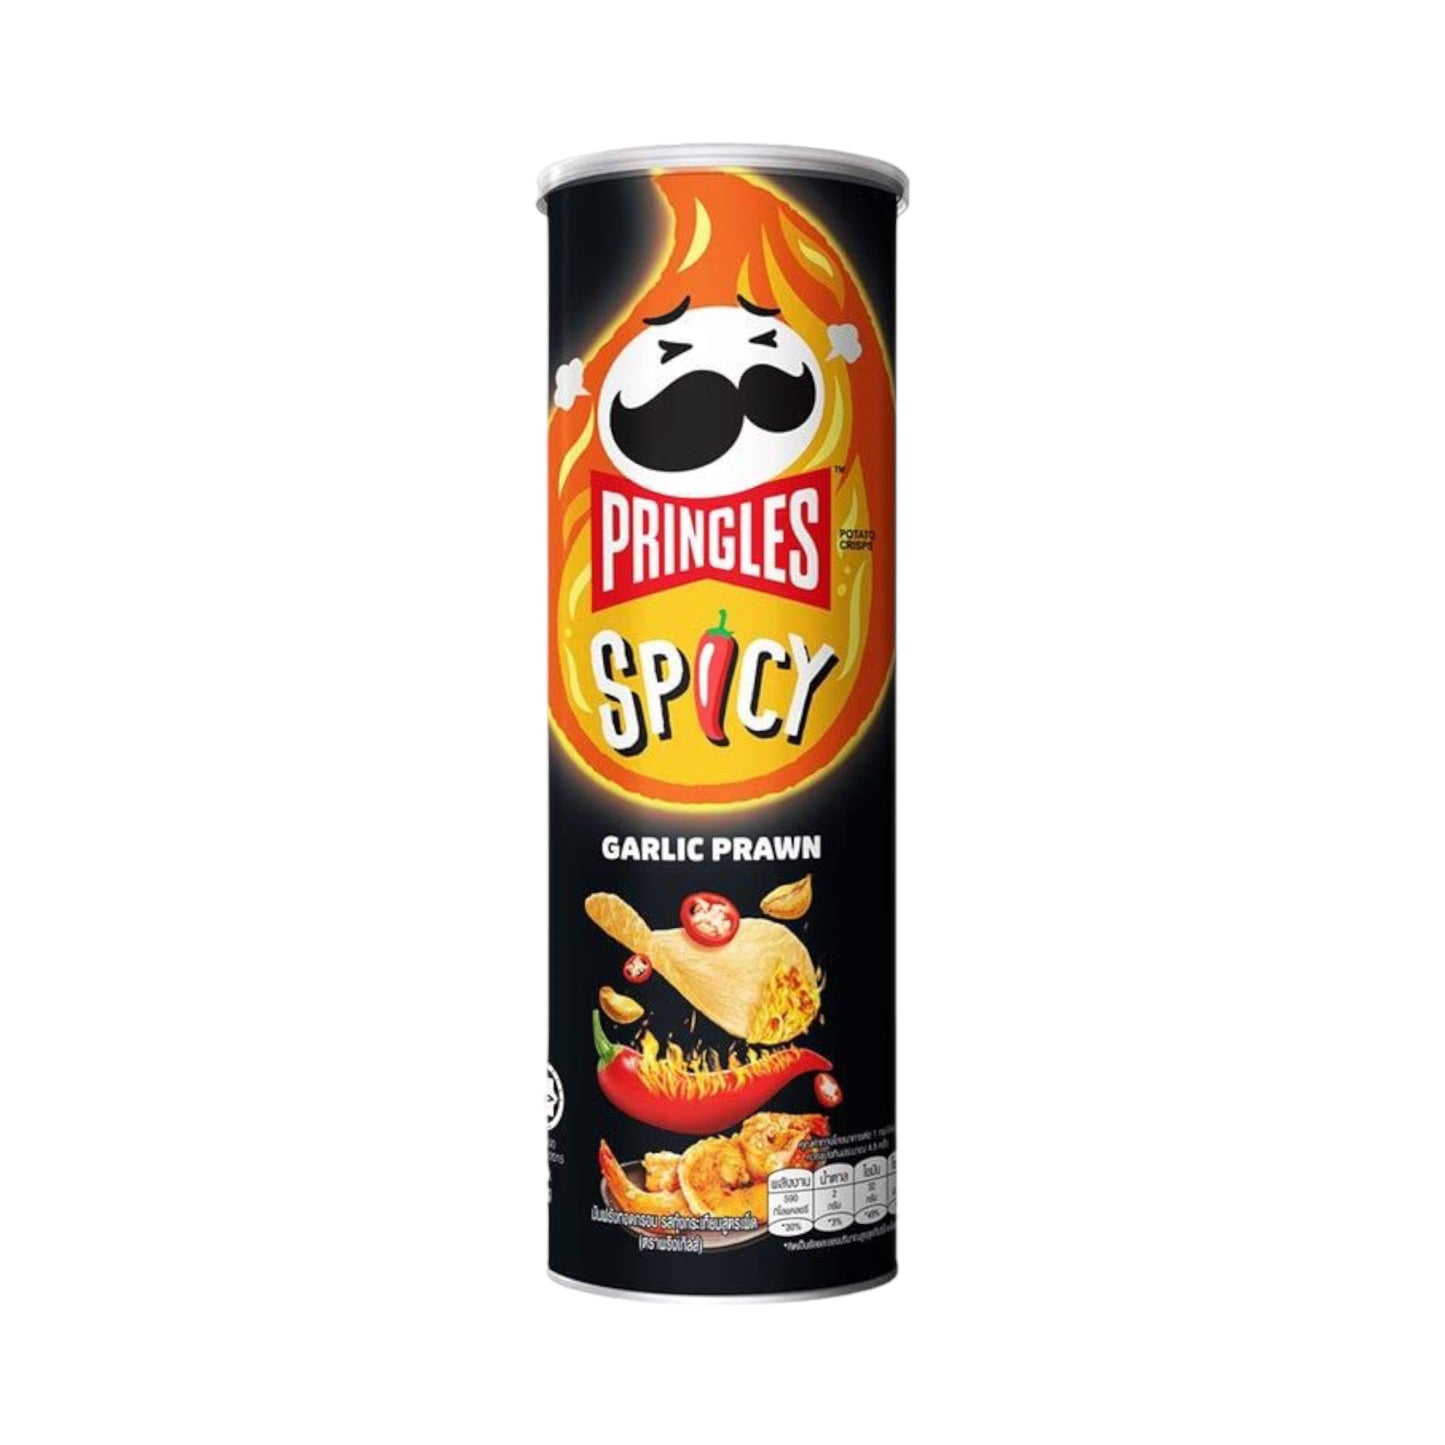 Pringles Spicy Garlic Prawn (Korea) - 110g